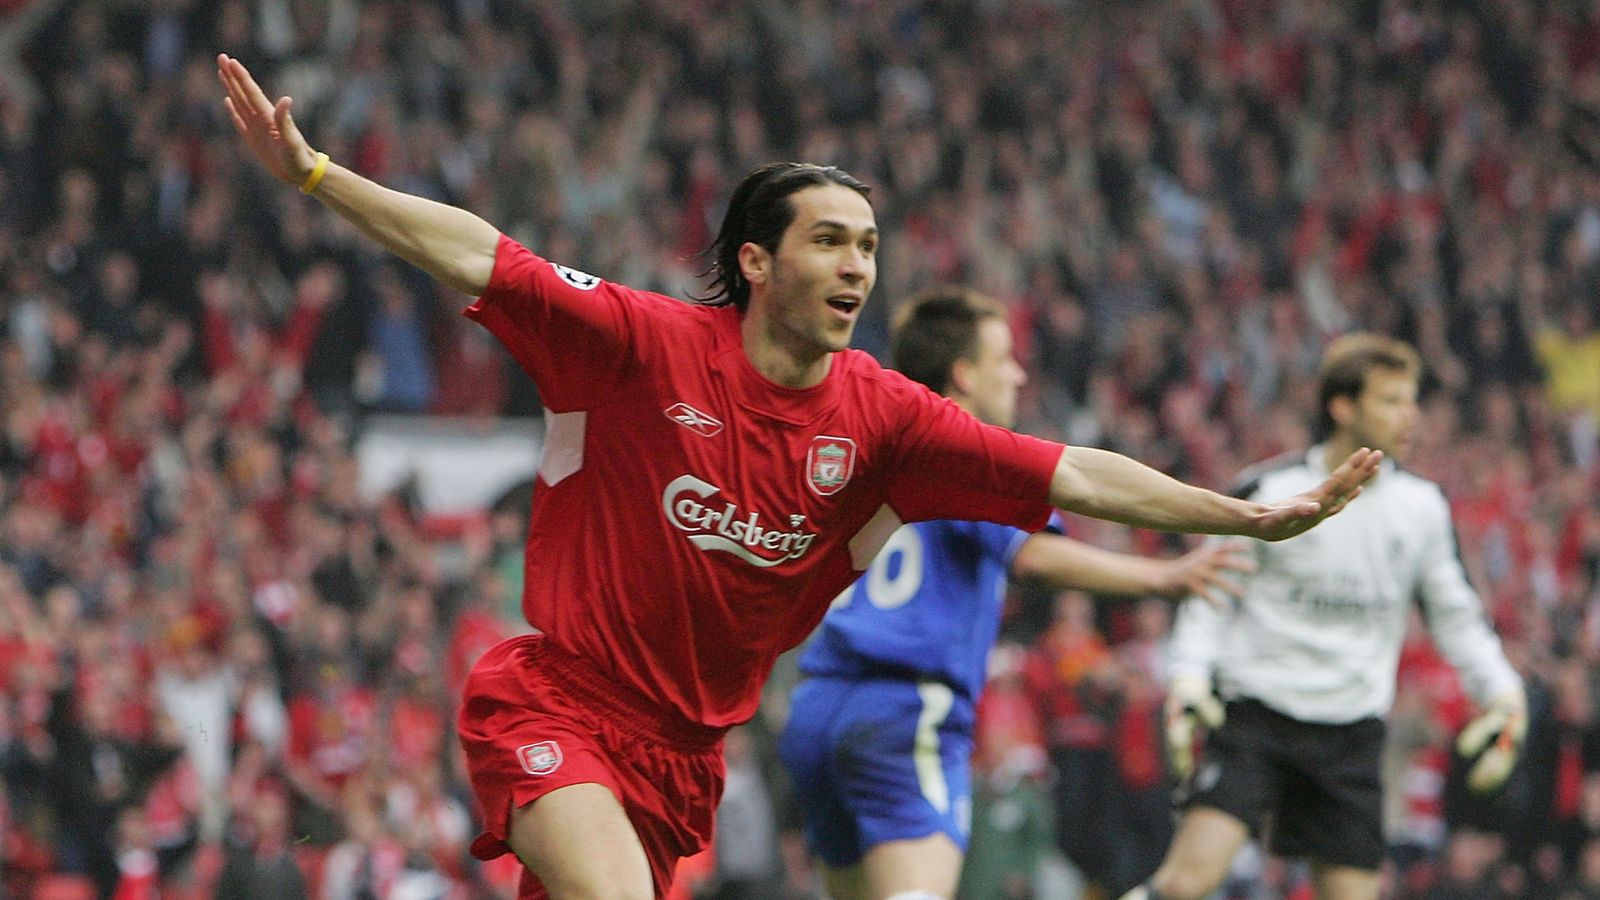 Liverpool can win the premier league: Football legend Luis Garcia 